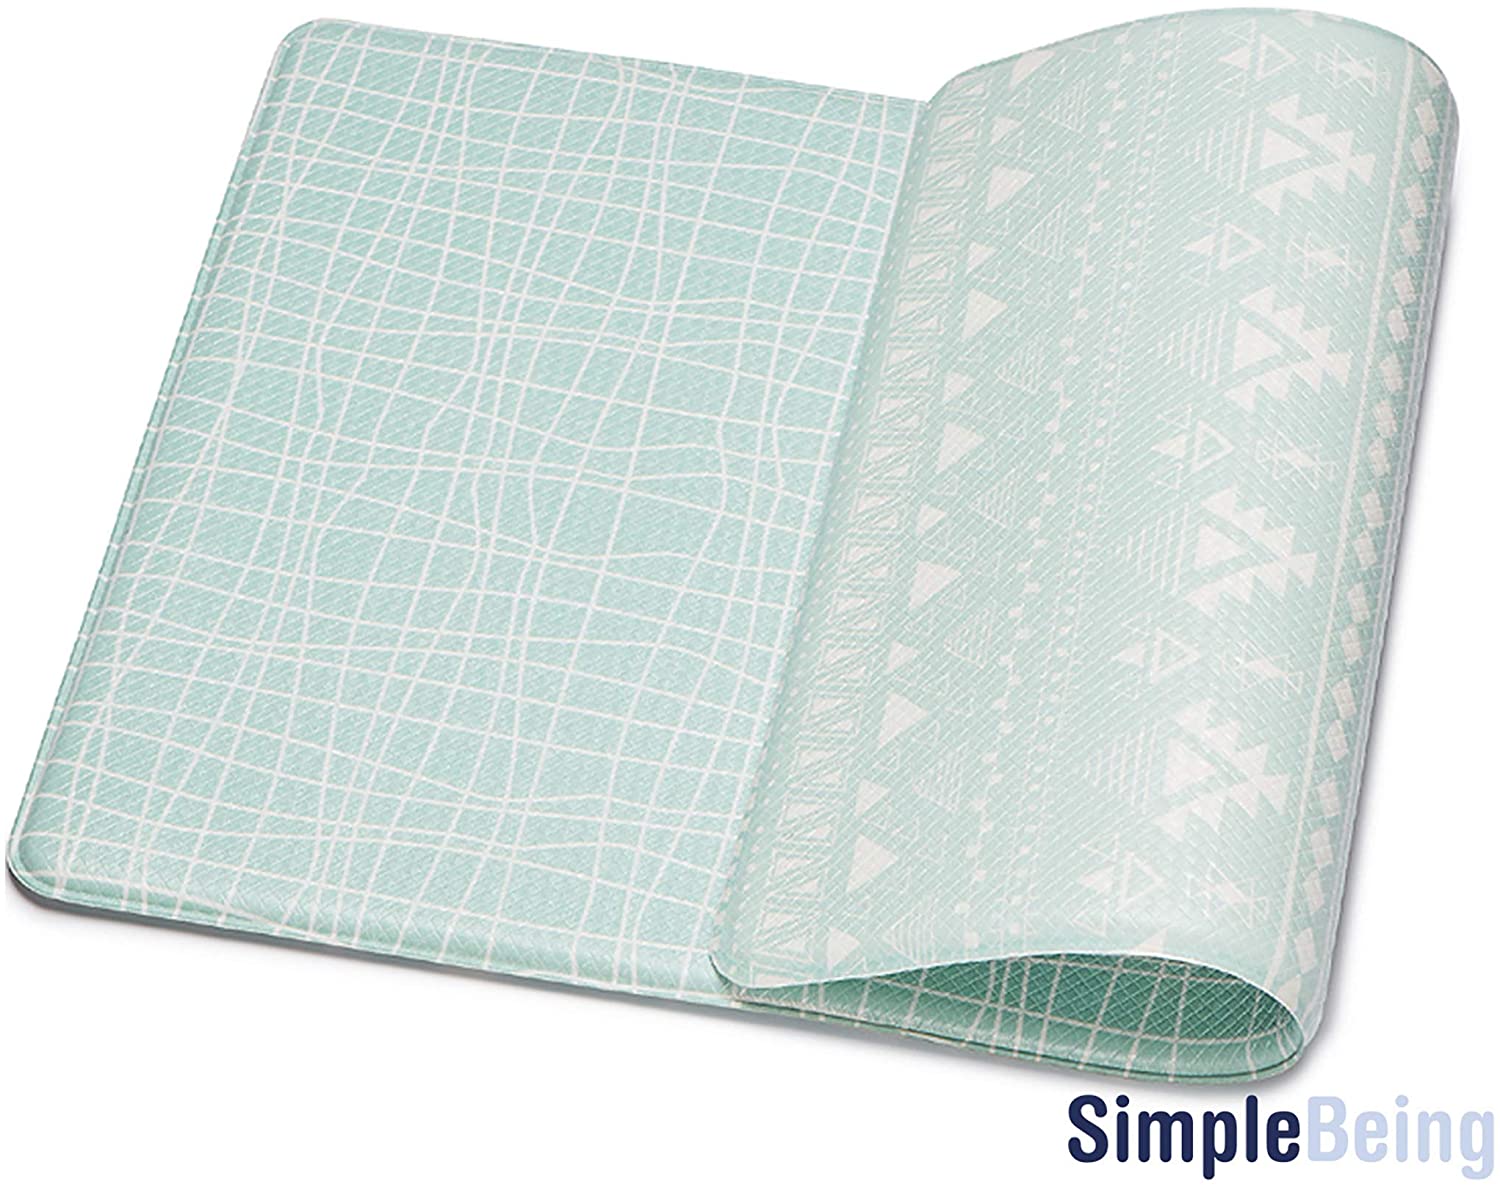 Simple Being Green Geometric Anti-Fatigue Kitchen Floor Mat (32" x 17.5")